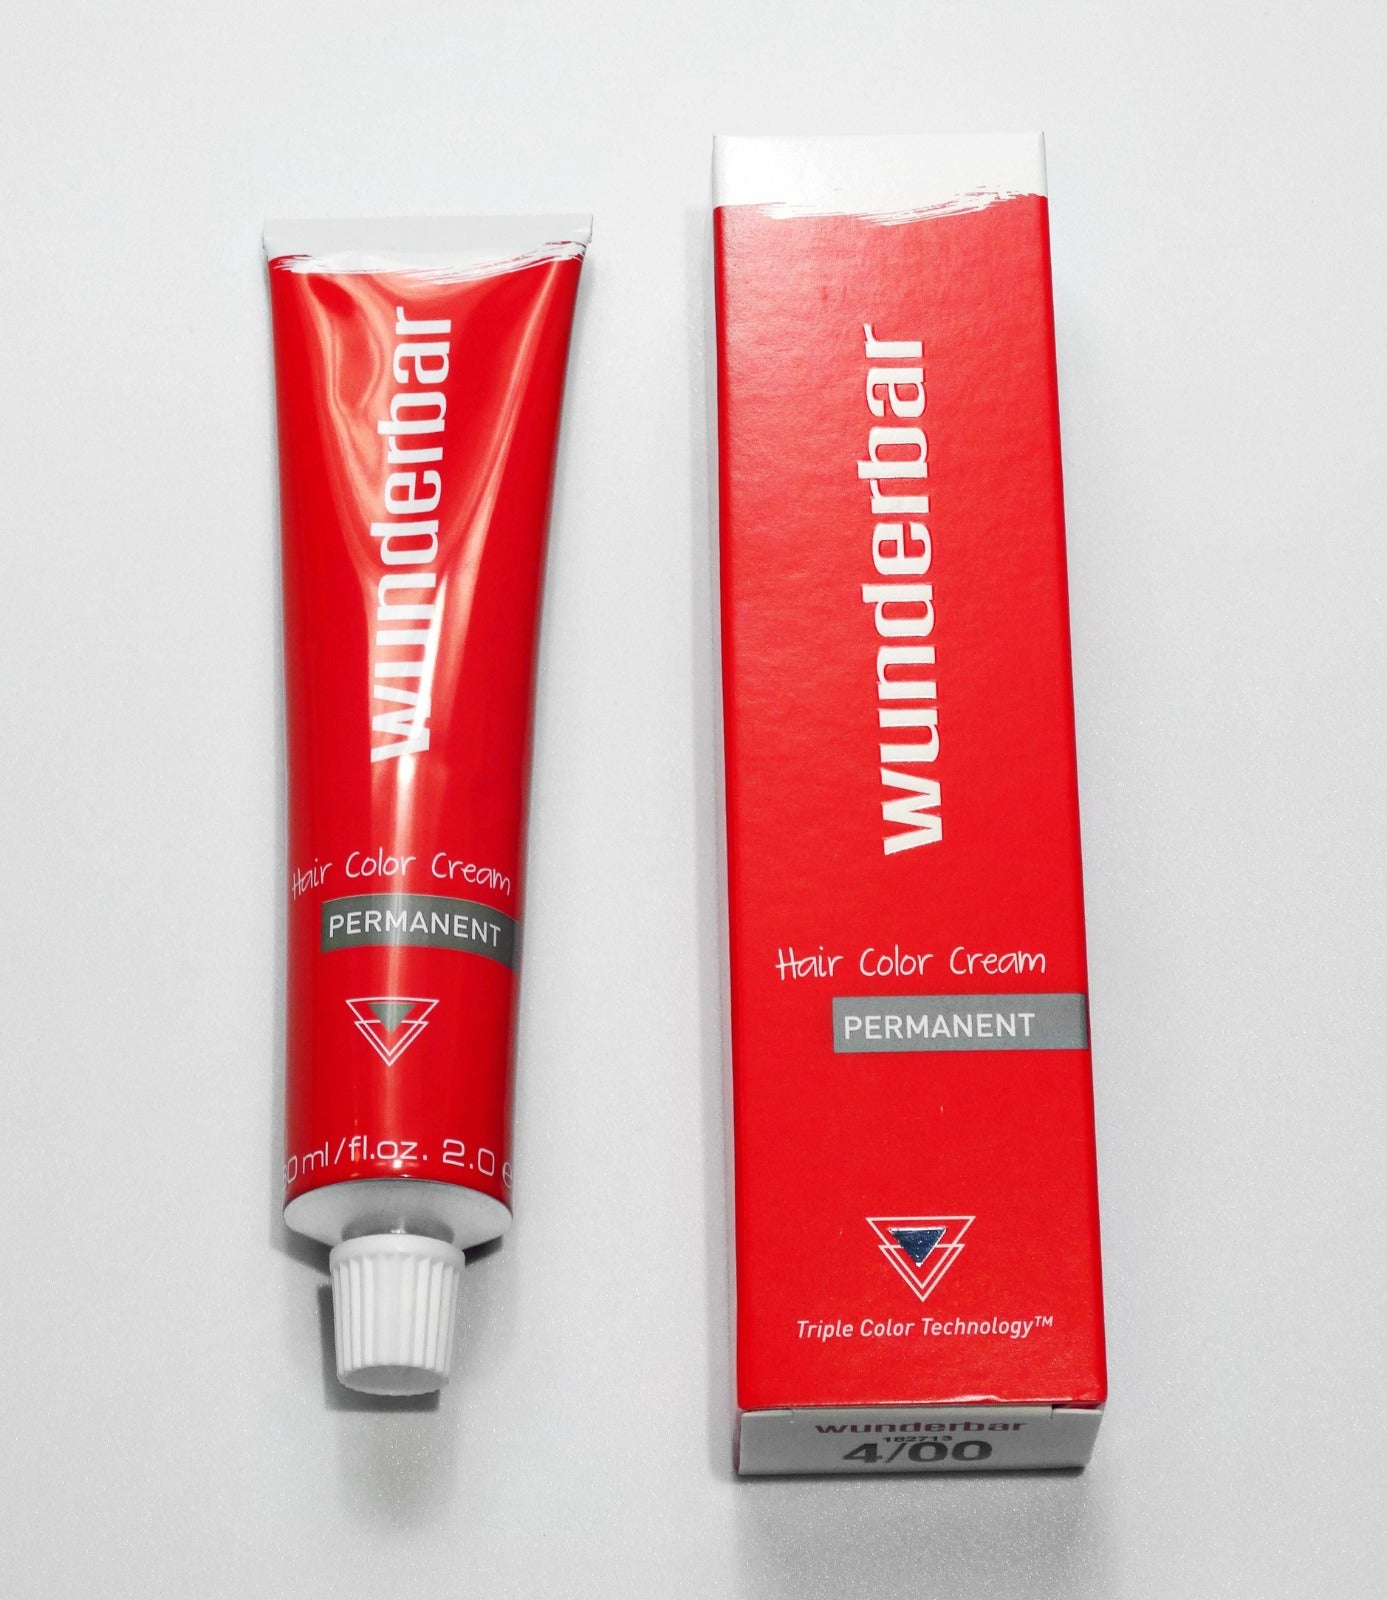 Wunderbar Permanent Hair Color Cream 10/7 60ml